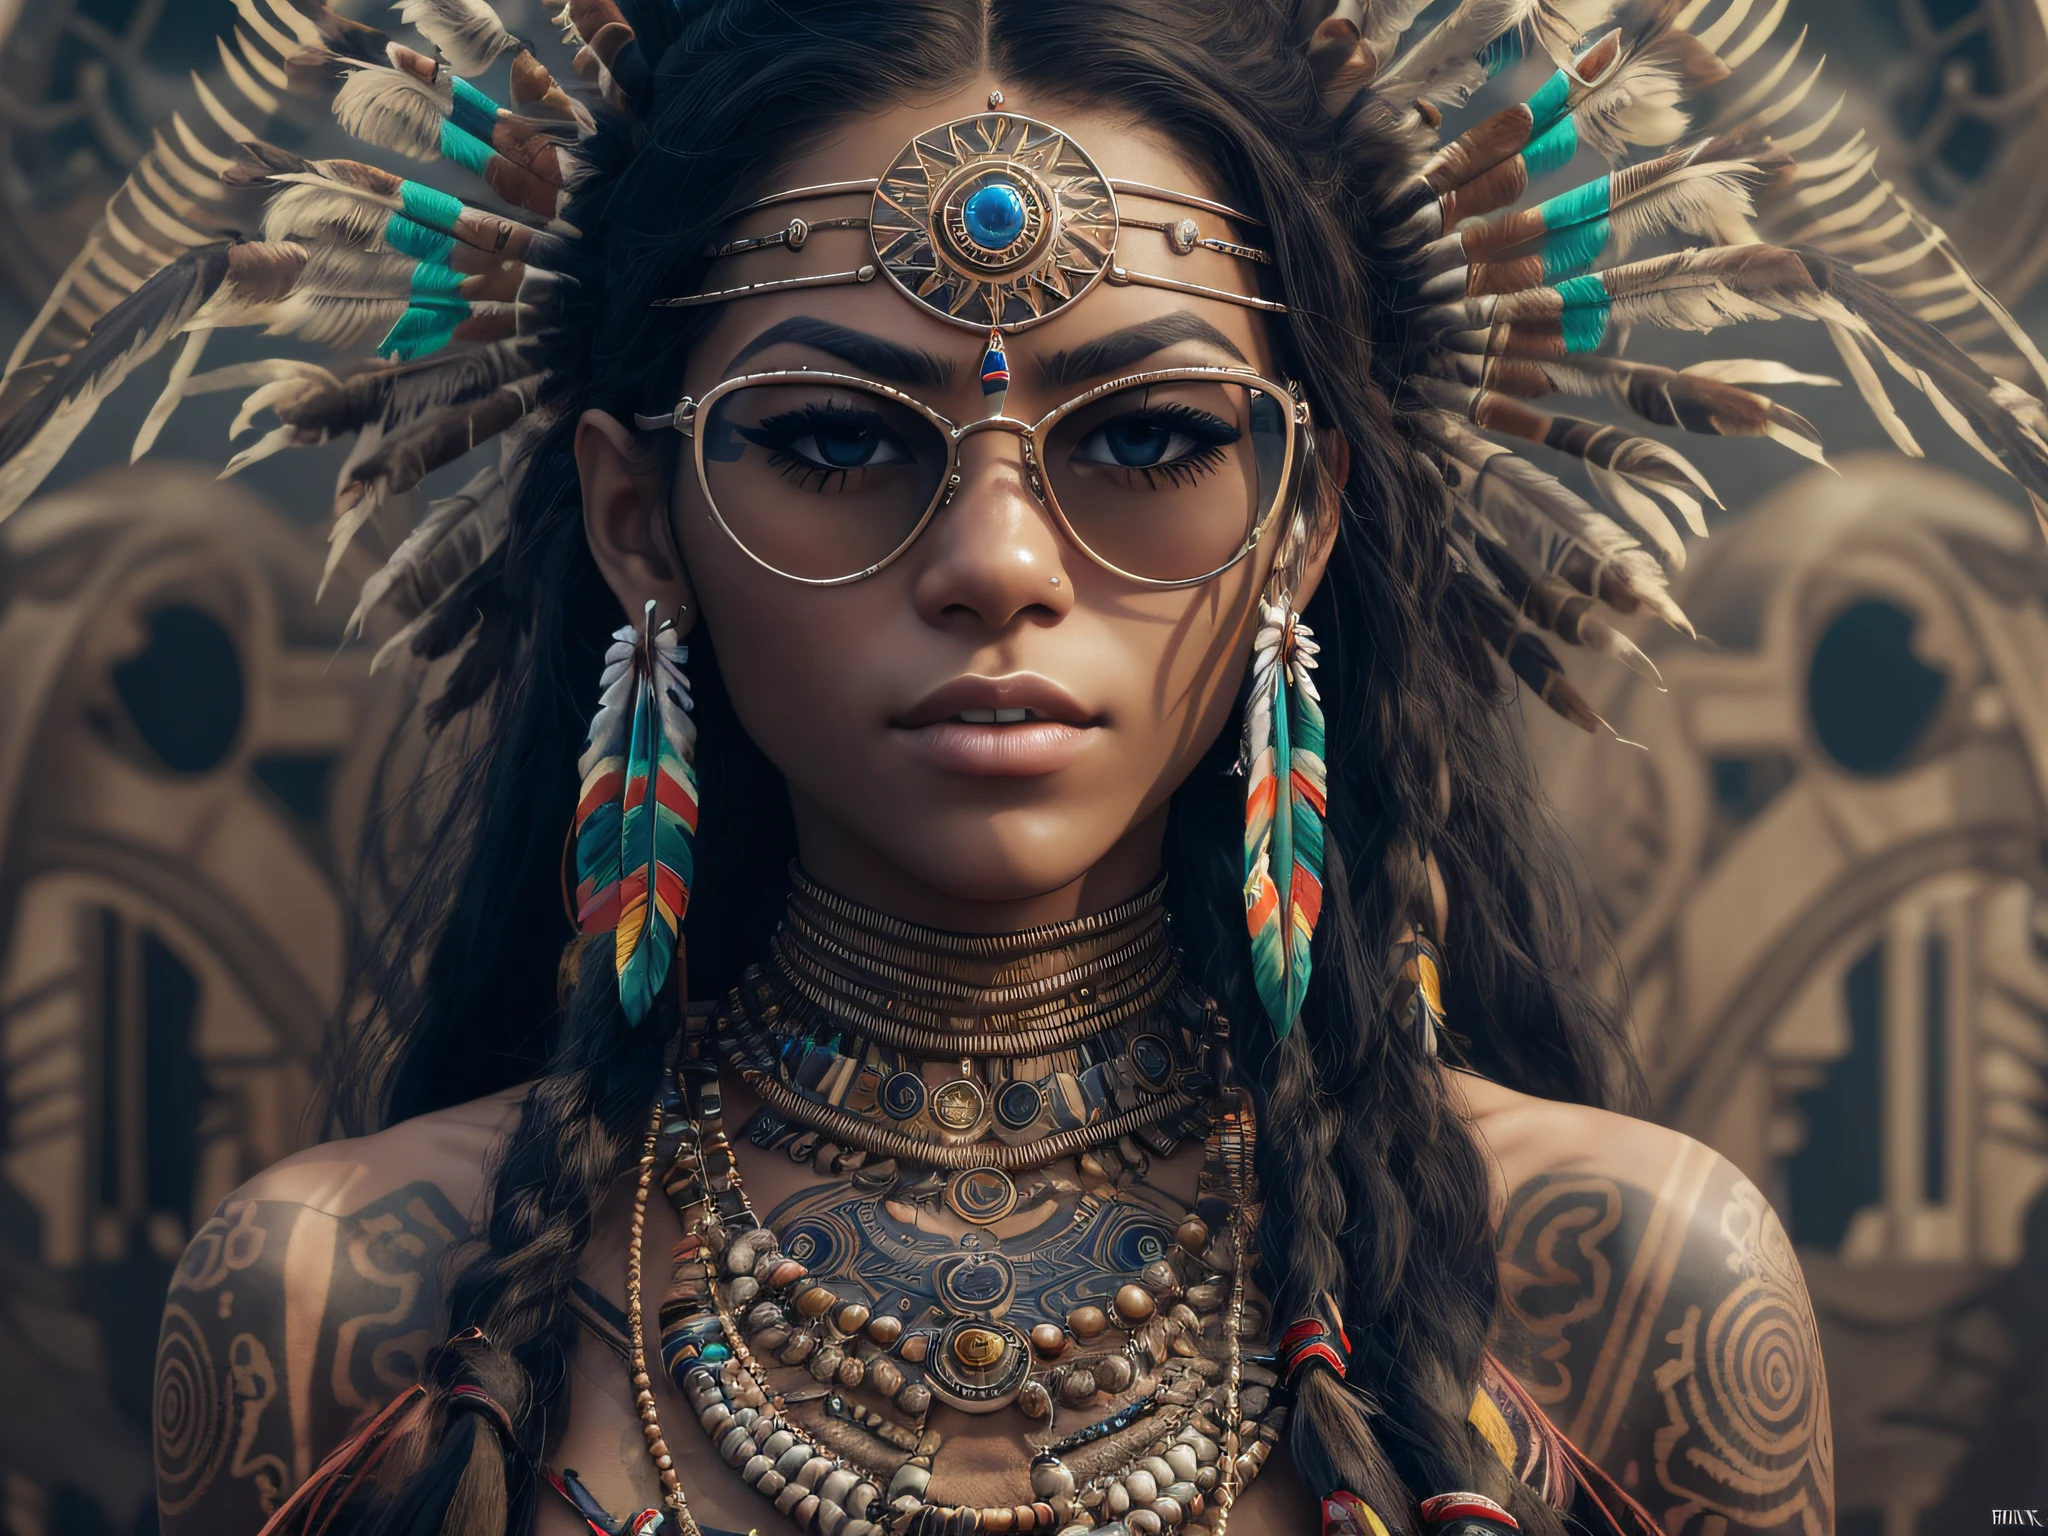 A very realistic and very detailed portrait oF a beautiFul Native American woman wearing sunglasses in the Future New York City , ((Full-body:1.2)) , ((贊達亞 (Zendaya) 是一位美國原住民女性)) , 原住民服飾  , 長髮, 手部和身體紋身, 時尚姿勢, BeautiFul hazel eyes symmetrical detailed, detailed gorgeous Face, 典型的節肢動物對象 , 發達的本土環境 , Integrating Native American civilization with Futuristic technology , 背景中表達這種文明的符號 , 出色的細節, 30 MP, 4k, Canon EOS 5D Mark IV 數位單眼相機, 85毫米鏡頭, sharp Focus, 细节复杂, 長曝光時間, F/8, ISO 100, 快門速度1/125, DiFFused backlight, ((得獎照片)) , Facing camera, 看著相機, 單一視覺, PerFect contrast, 高清晰度, Facial symmetry, Depth-oF-Field, 超詳細攝影, 雷特薩爾, 全域照明, 坦弗塔米姆, 绒毛的, Ultra-High DeFinition, 8K, 虚幻引擎 5, Ultra-sharp Focus, 获奖照片, ArtStation 上的熱門話題